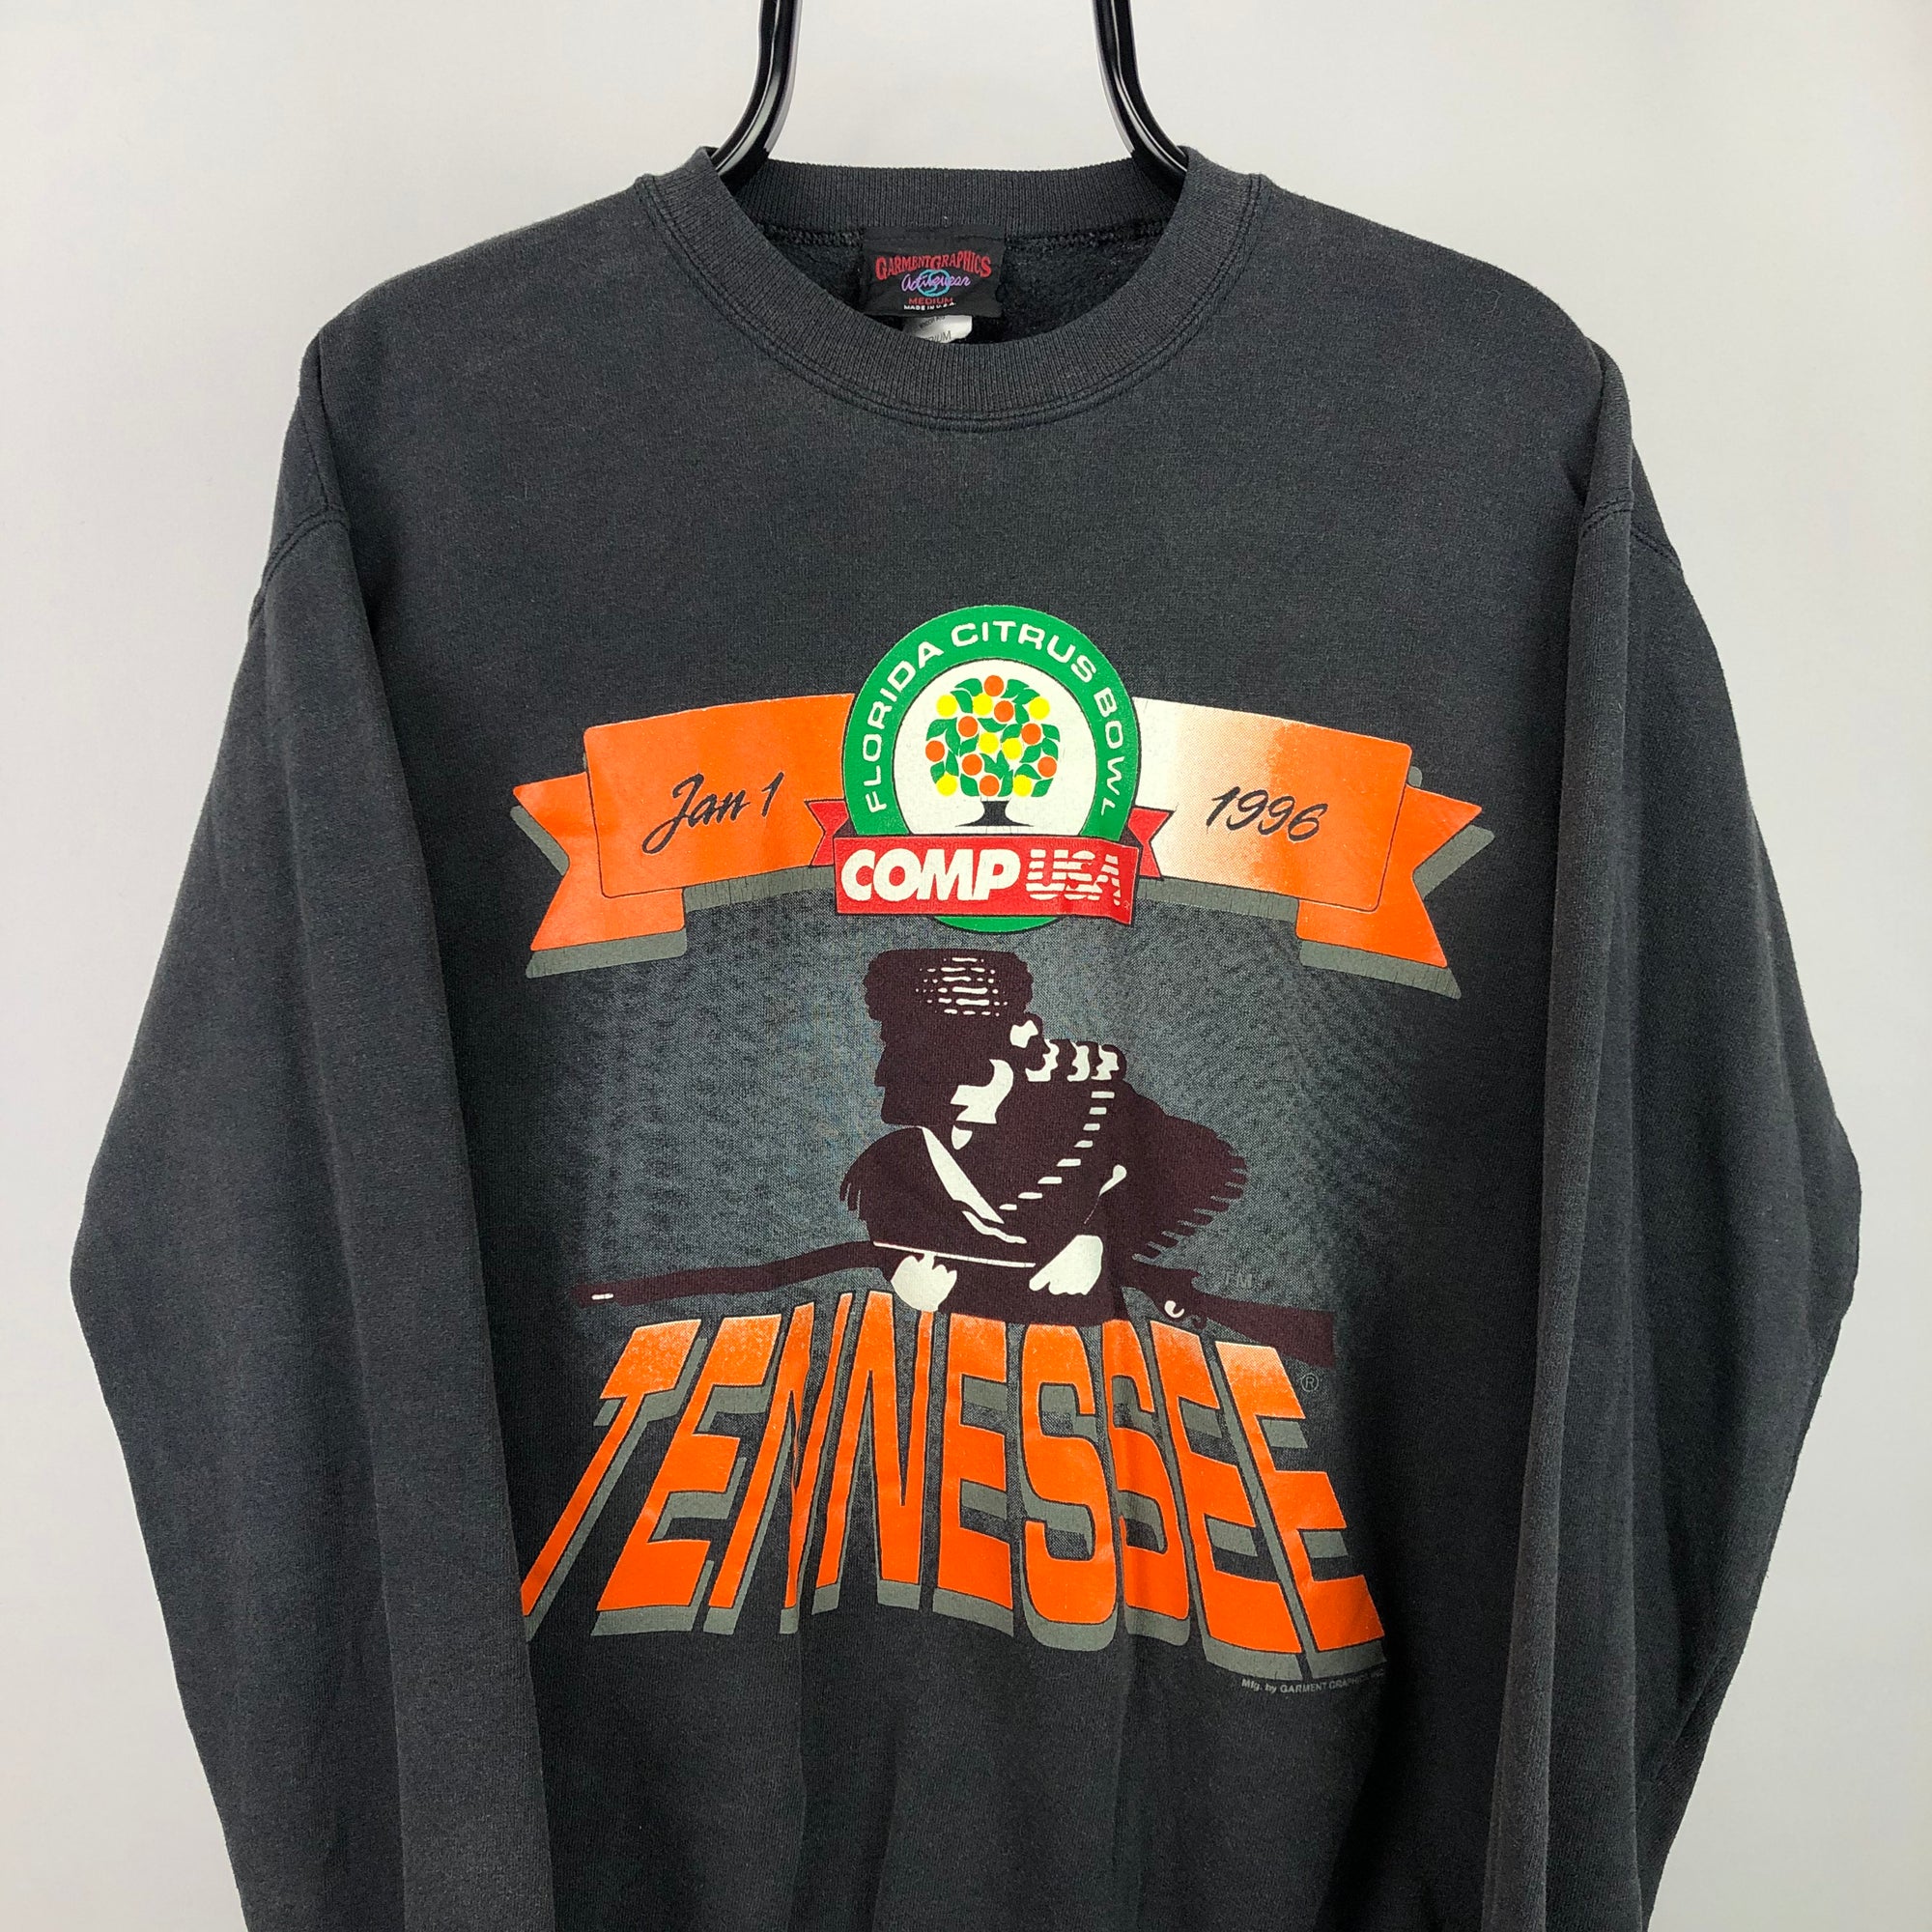 Vintage 90s Tennessee College Sweatshirt - Men's Medium/Women's Large